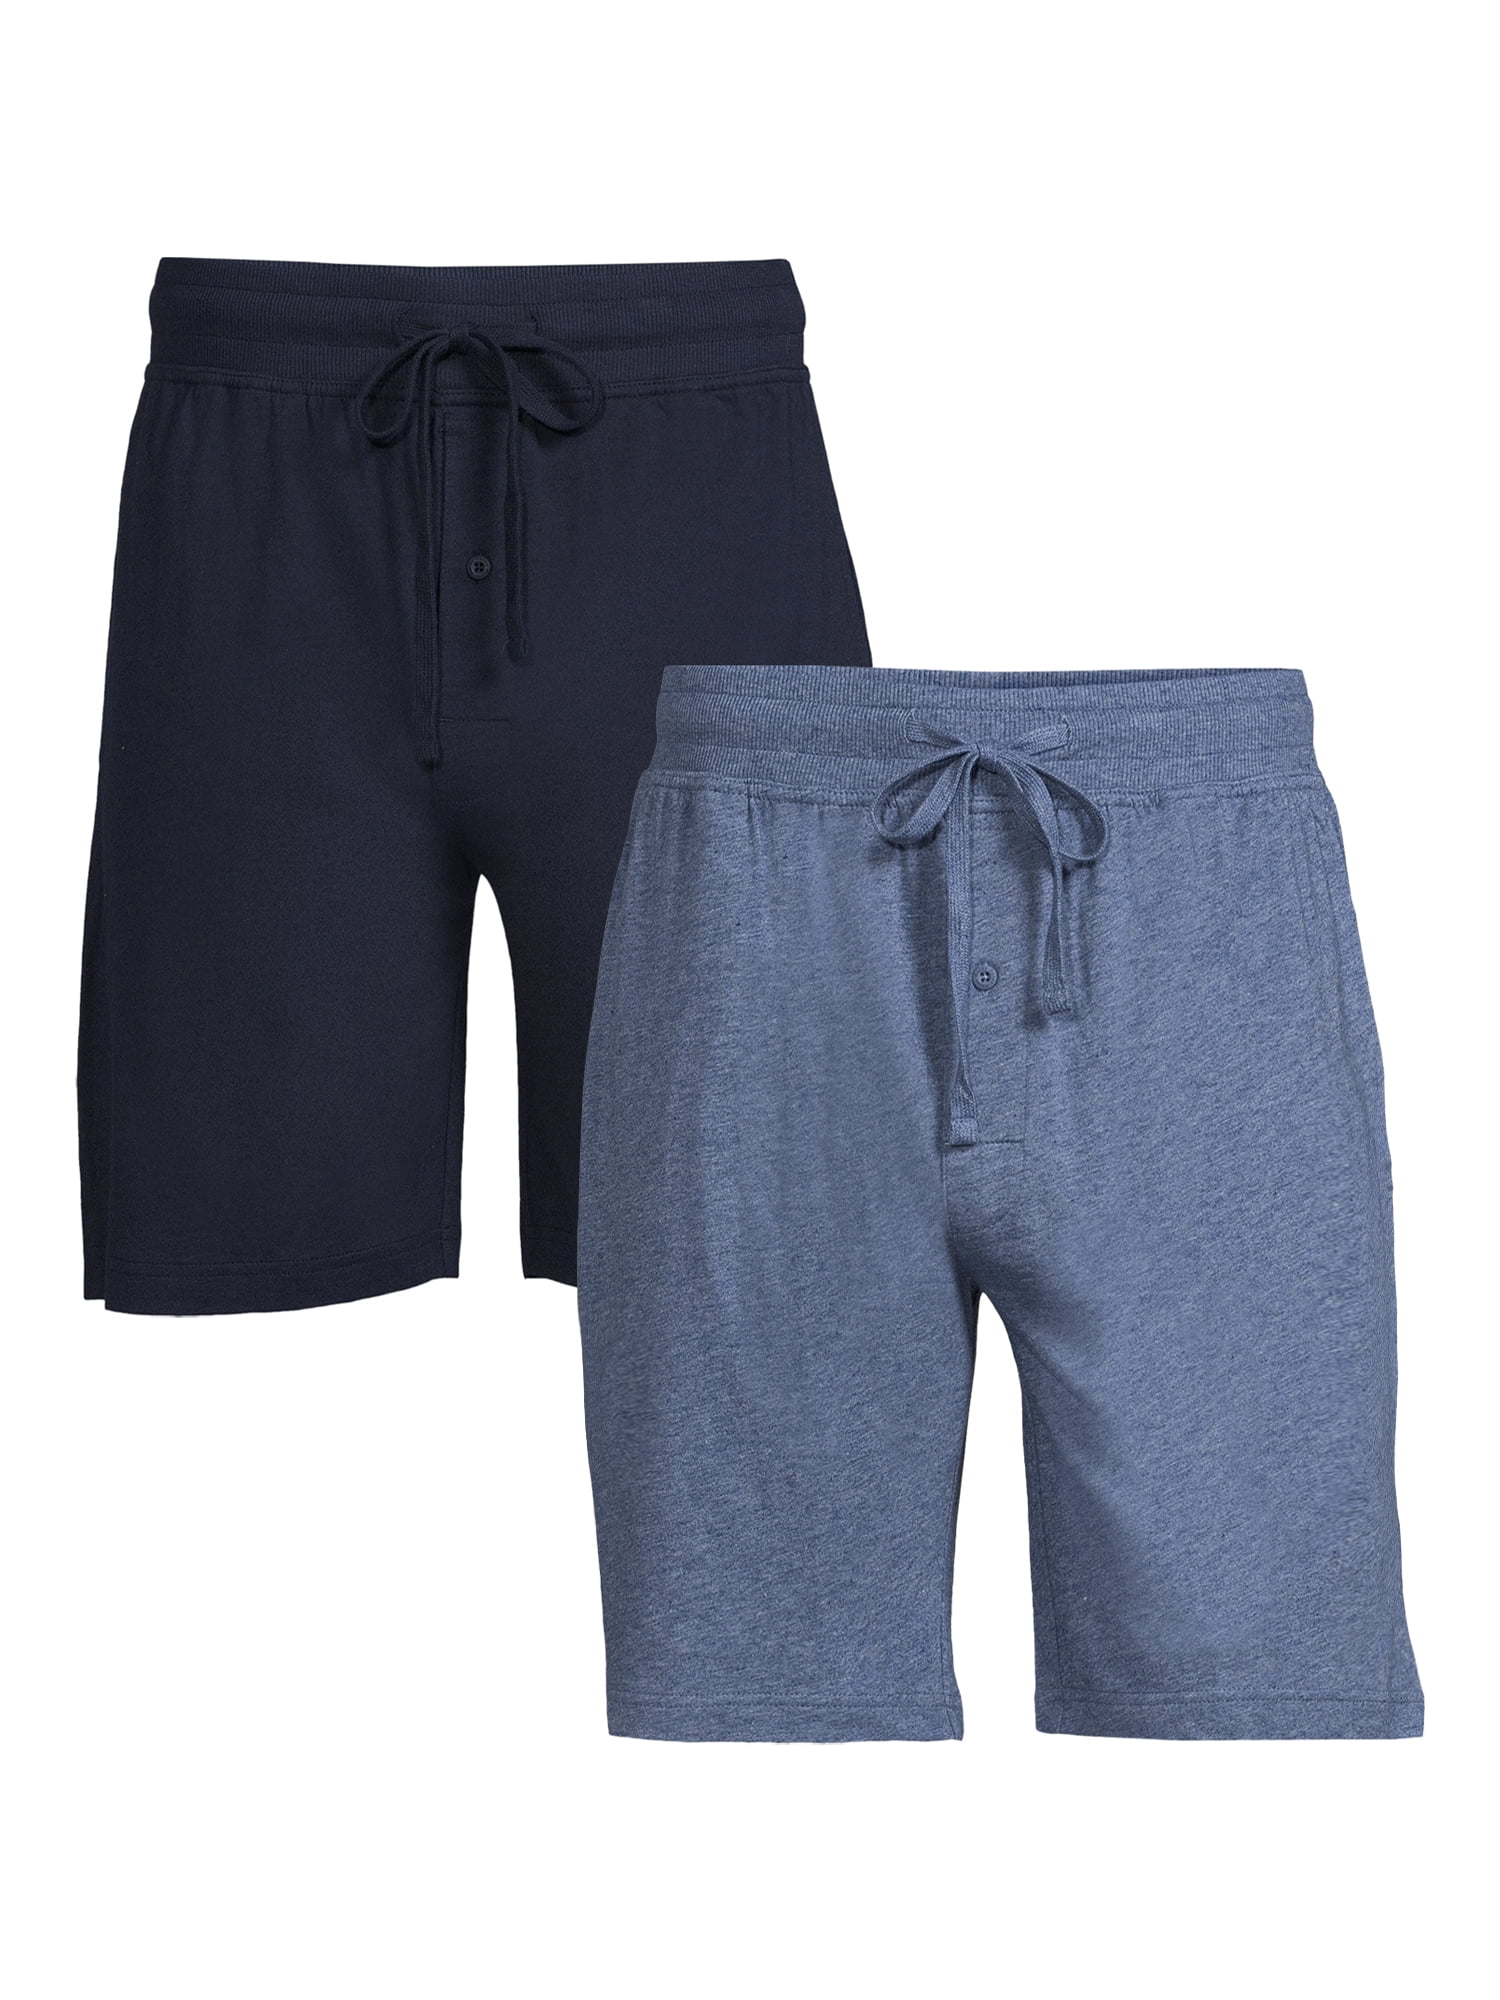 Hanes Men's Cotton Modal ComfortFlexFit Sleep Shorts, 2-pack 